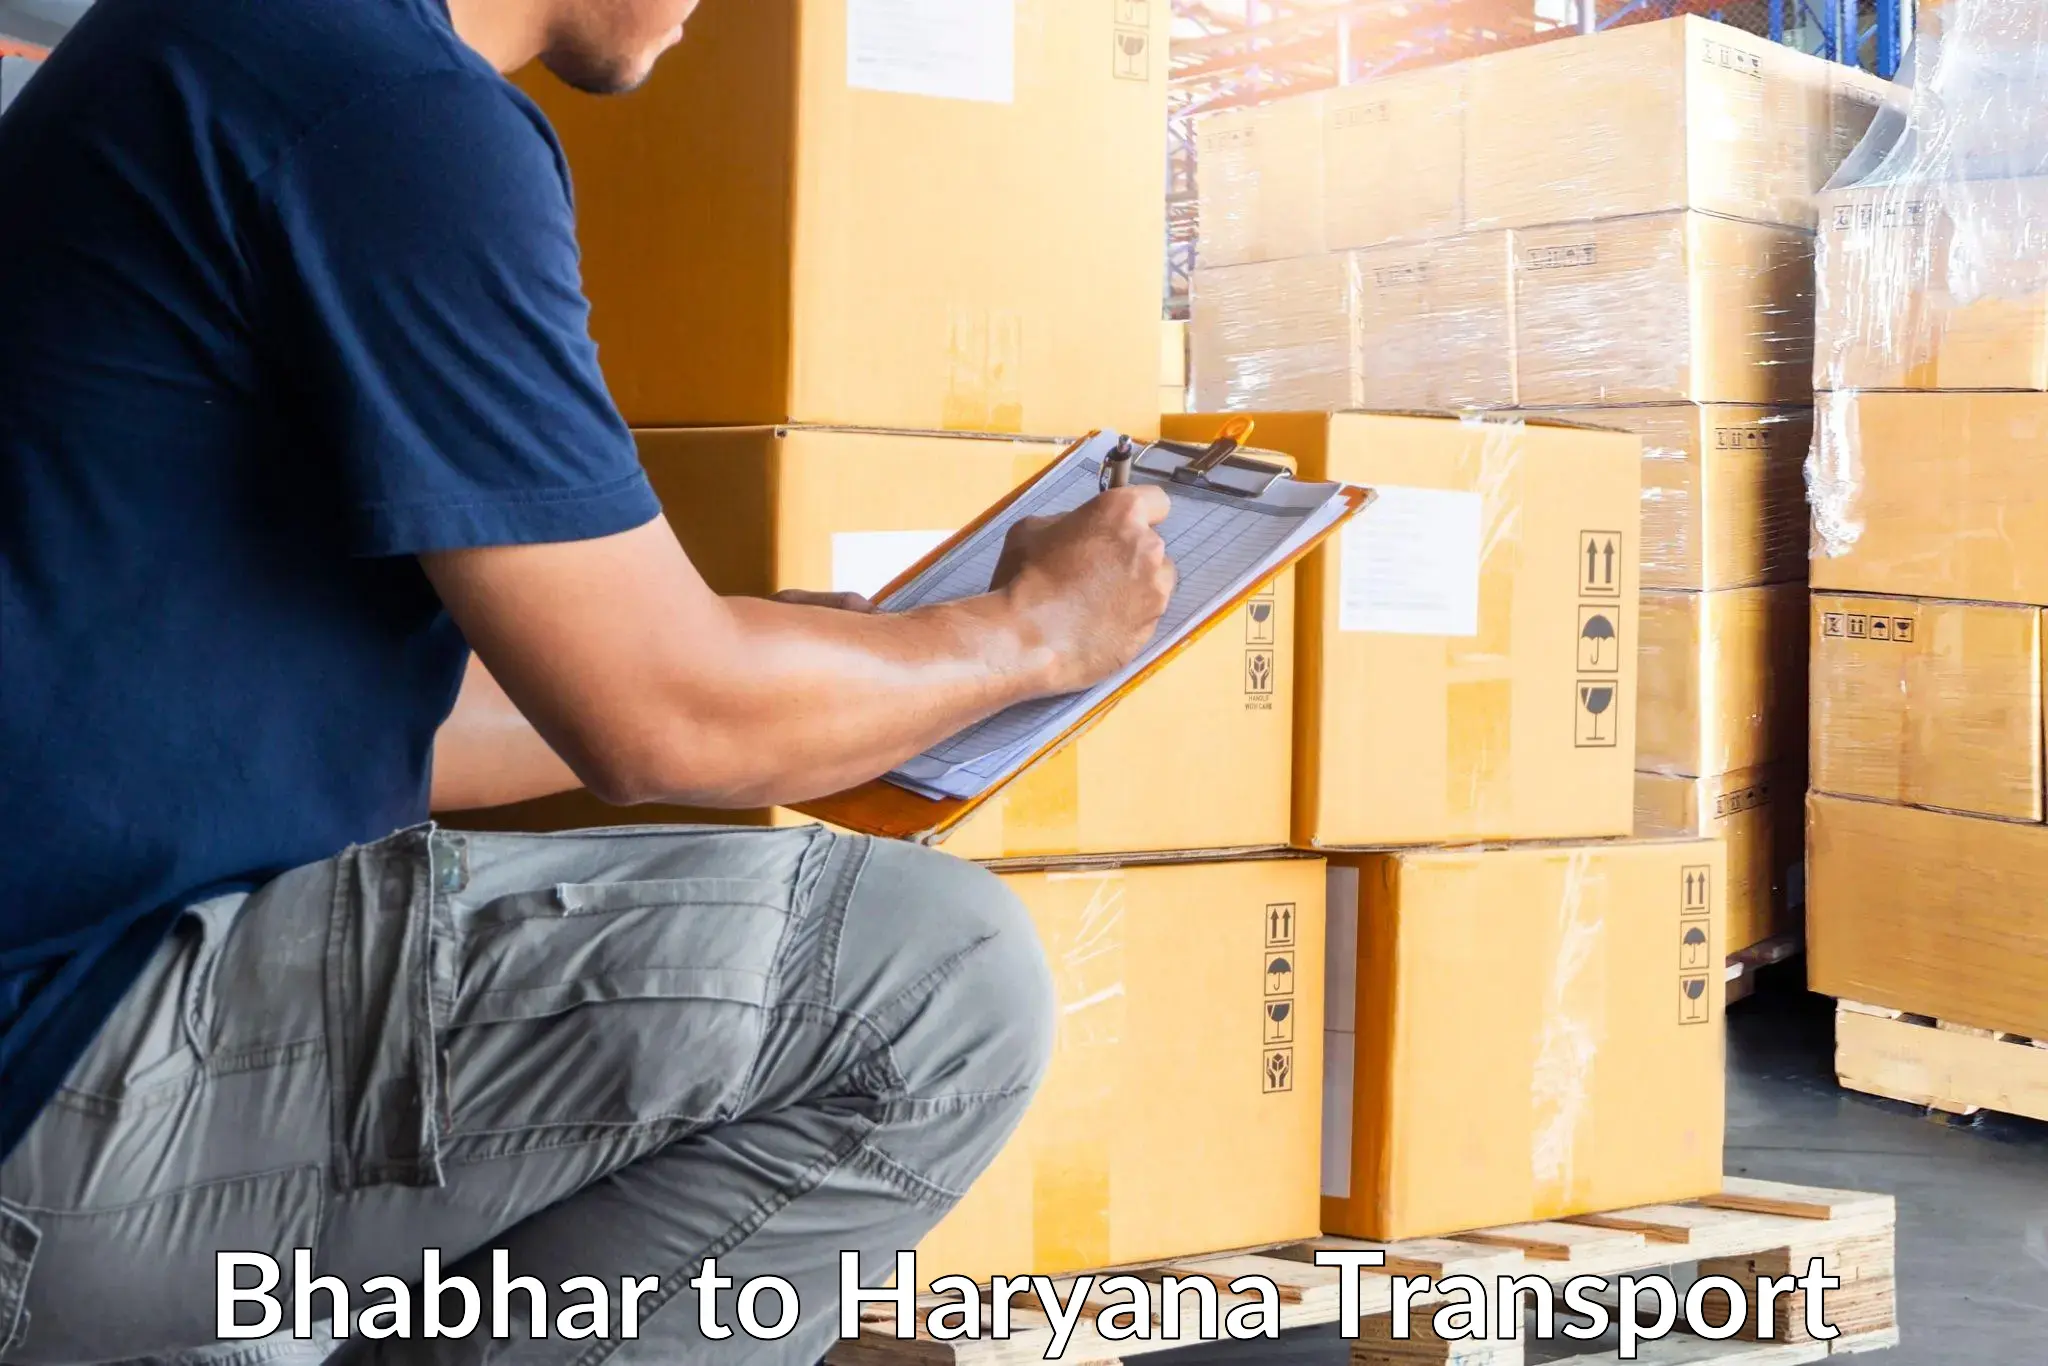 Daily parcel service transport Bhabhar to Gurgaon